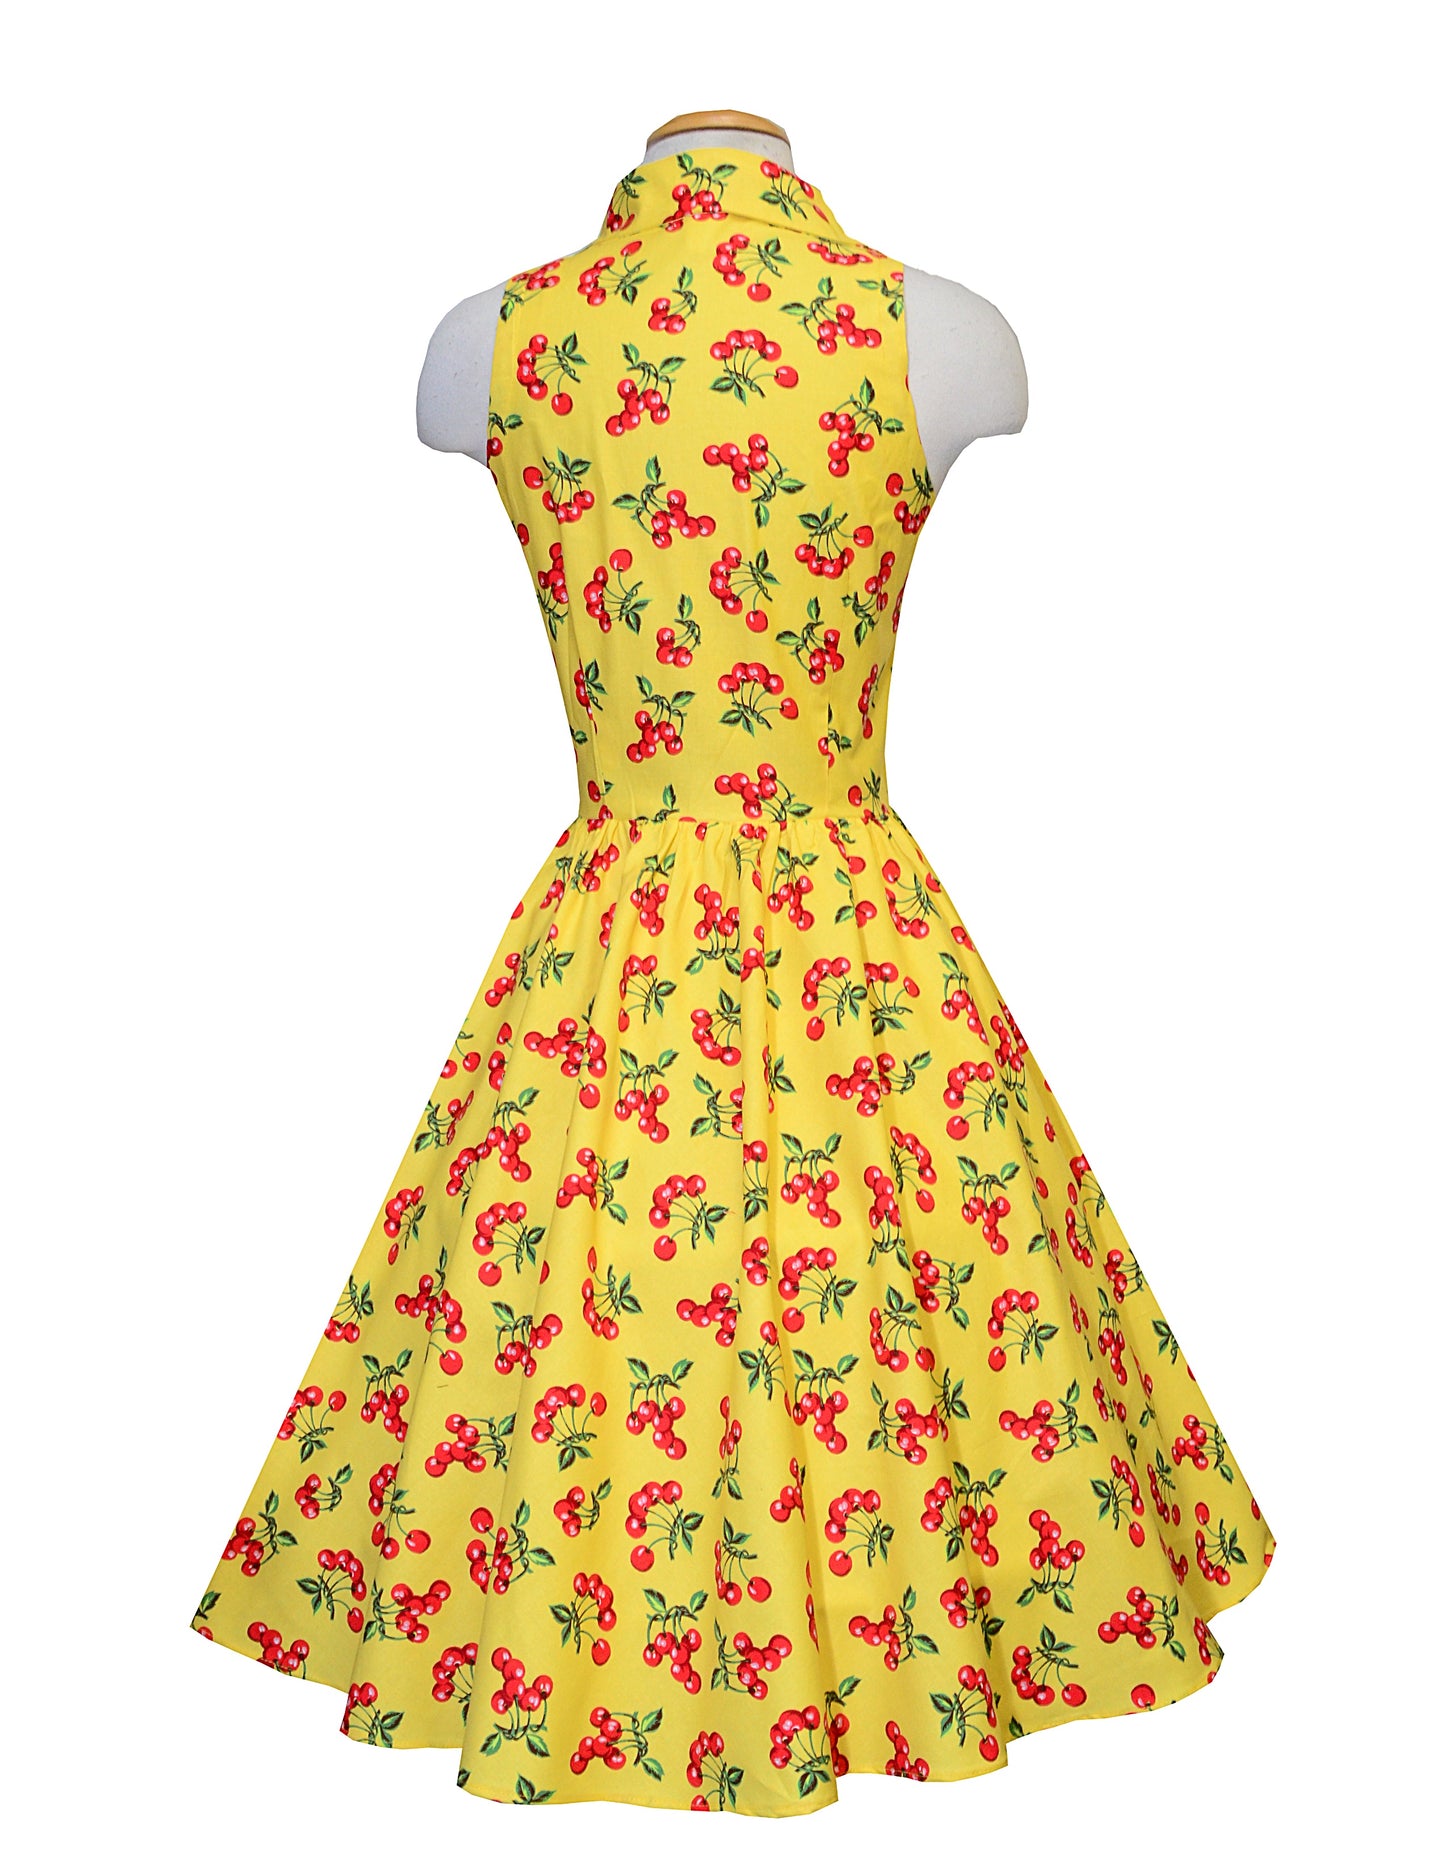 Deanna Dress in Cherry Print